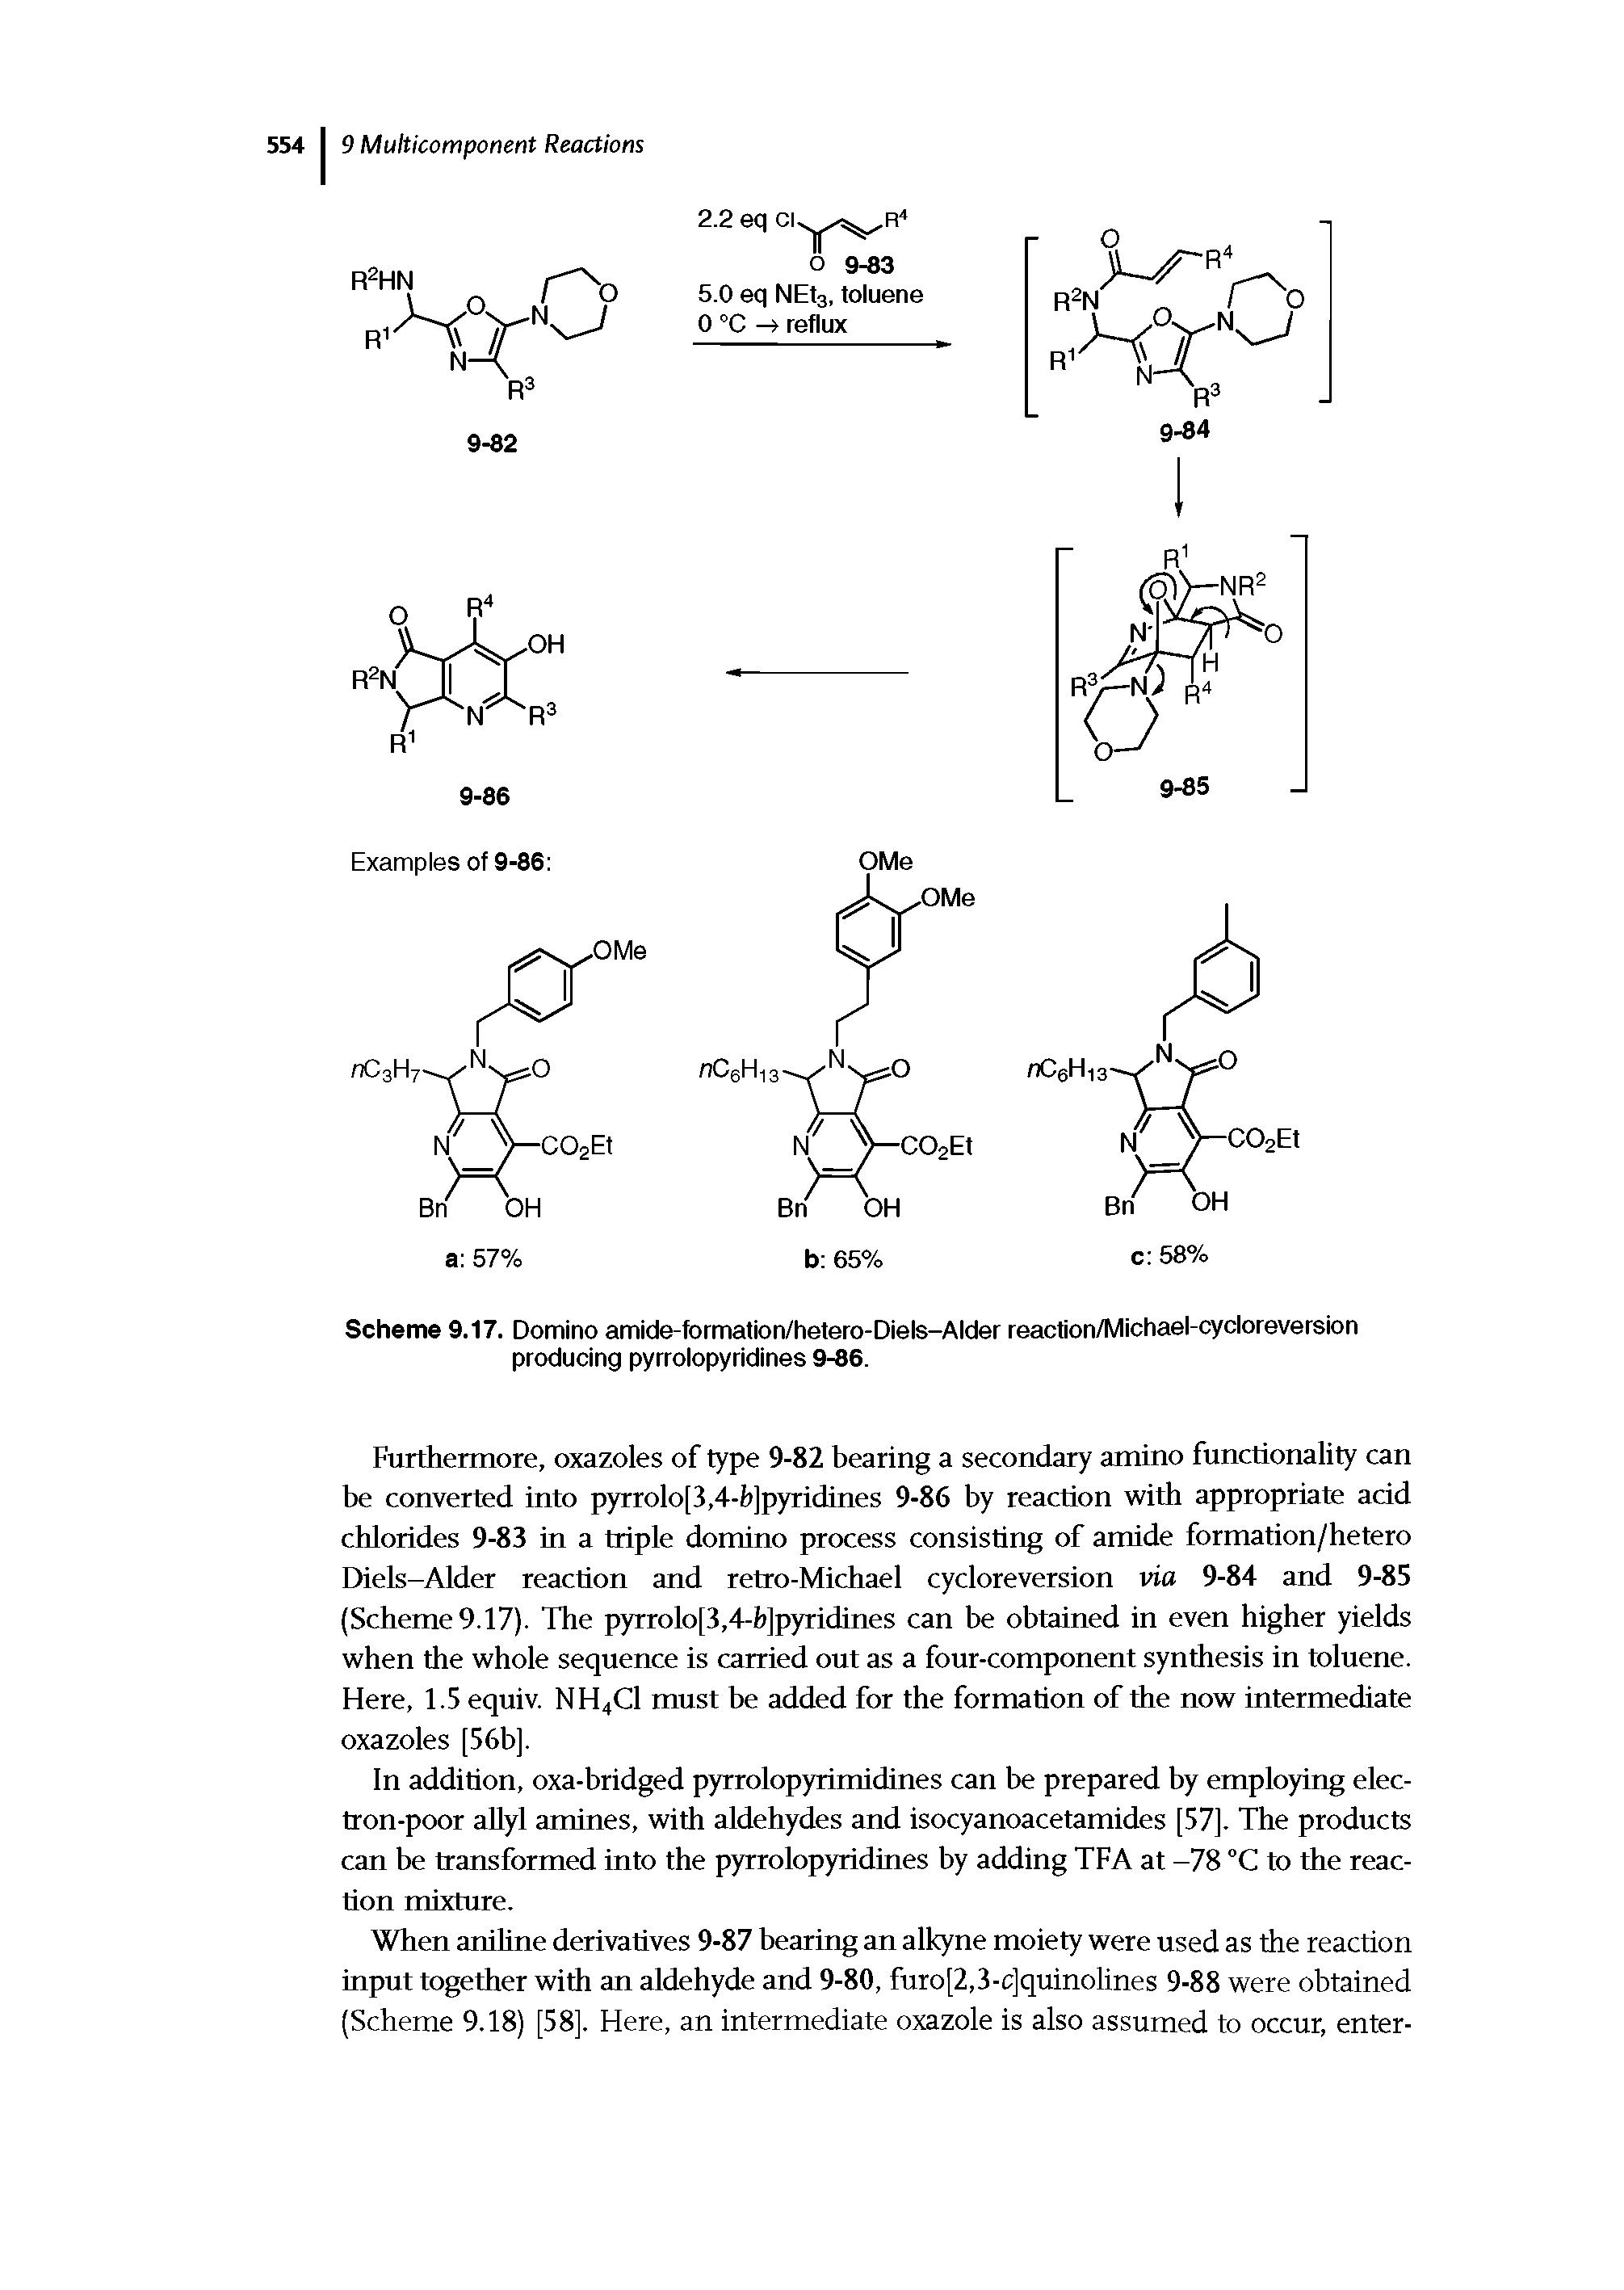 Scheme 9.17. Domino amide-formation/hetero-Diels-Alder reaction/Michael-cycloreversion producing pyrrolopyridines 9-86.